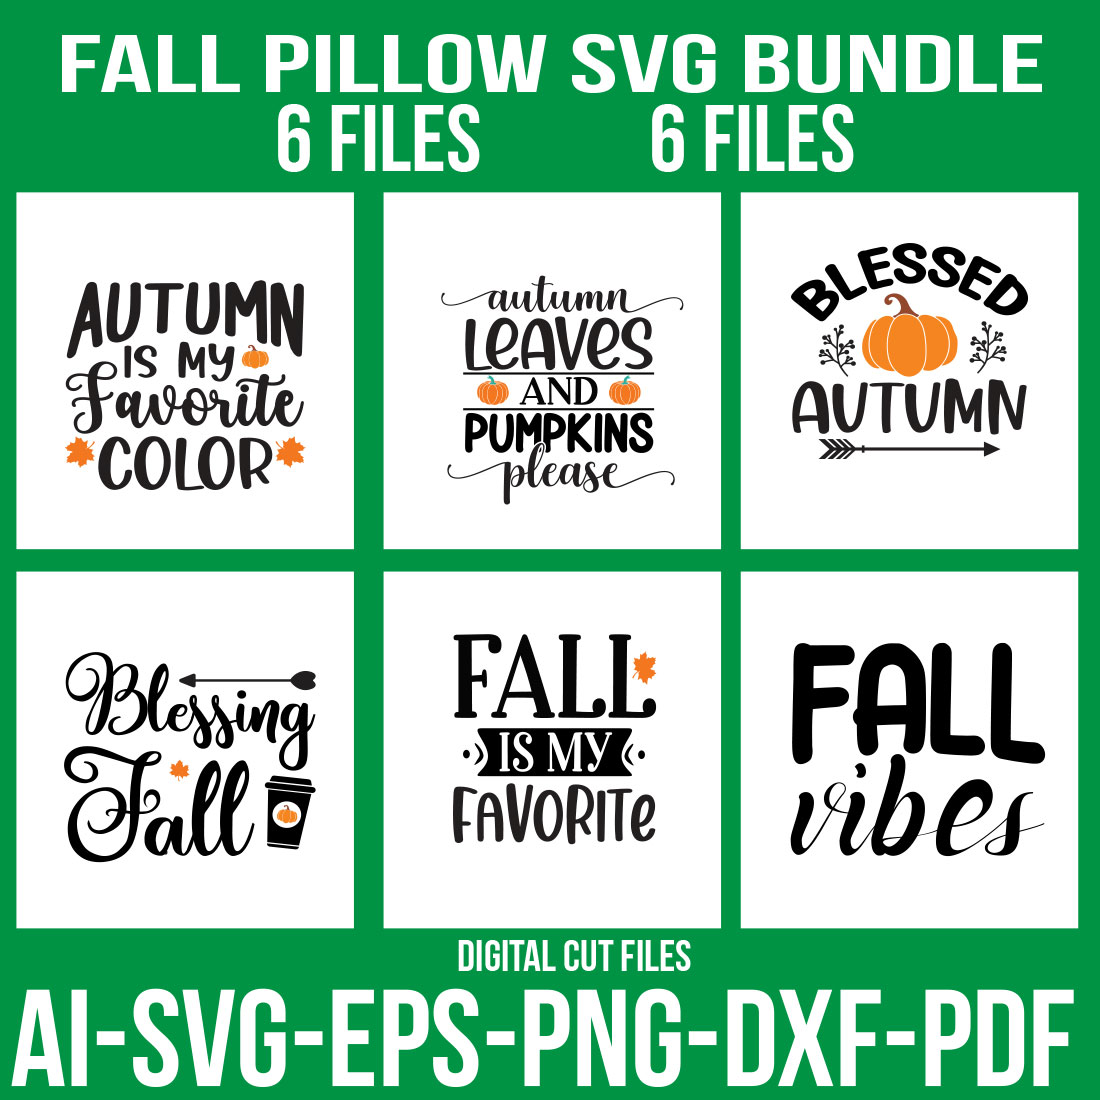 Fall Pillow SVG Bundle cover image.